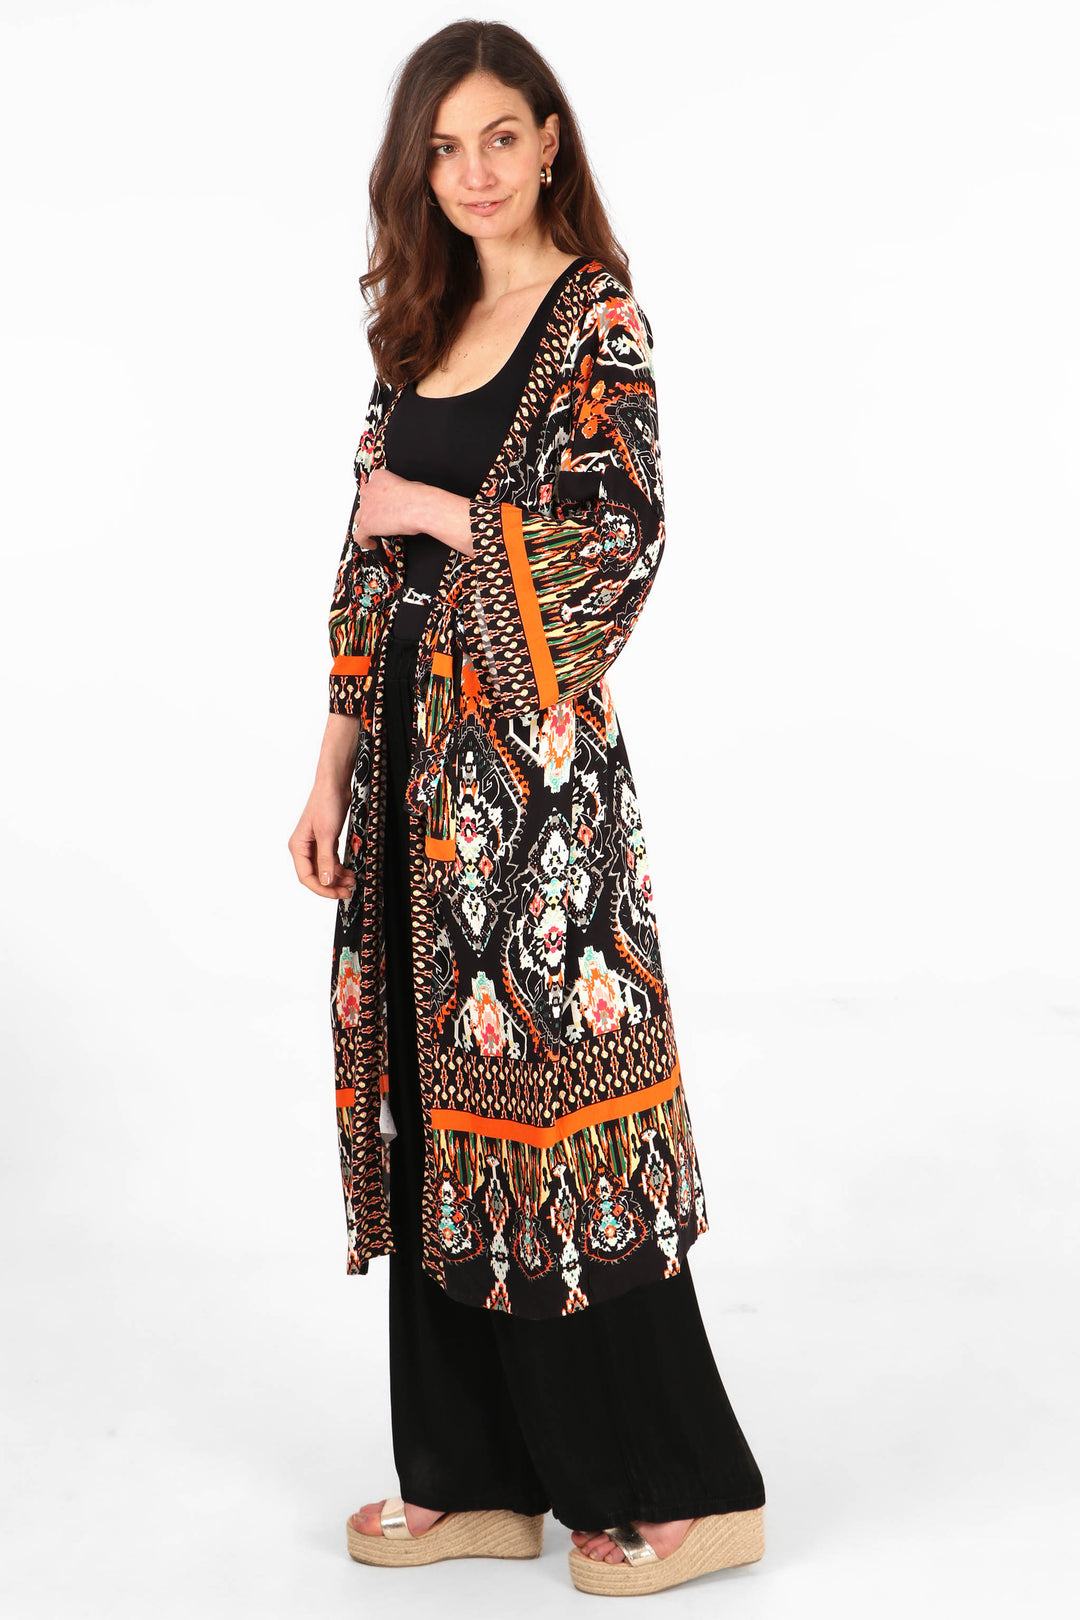 model wearing an ornate black and orange mandala print midi length kimono robe